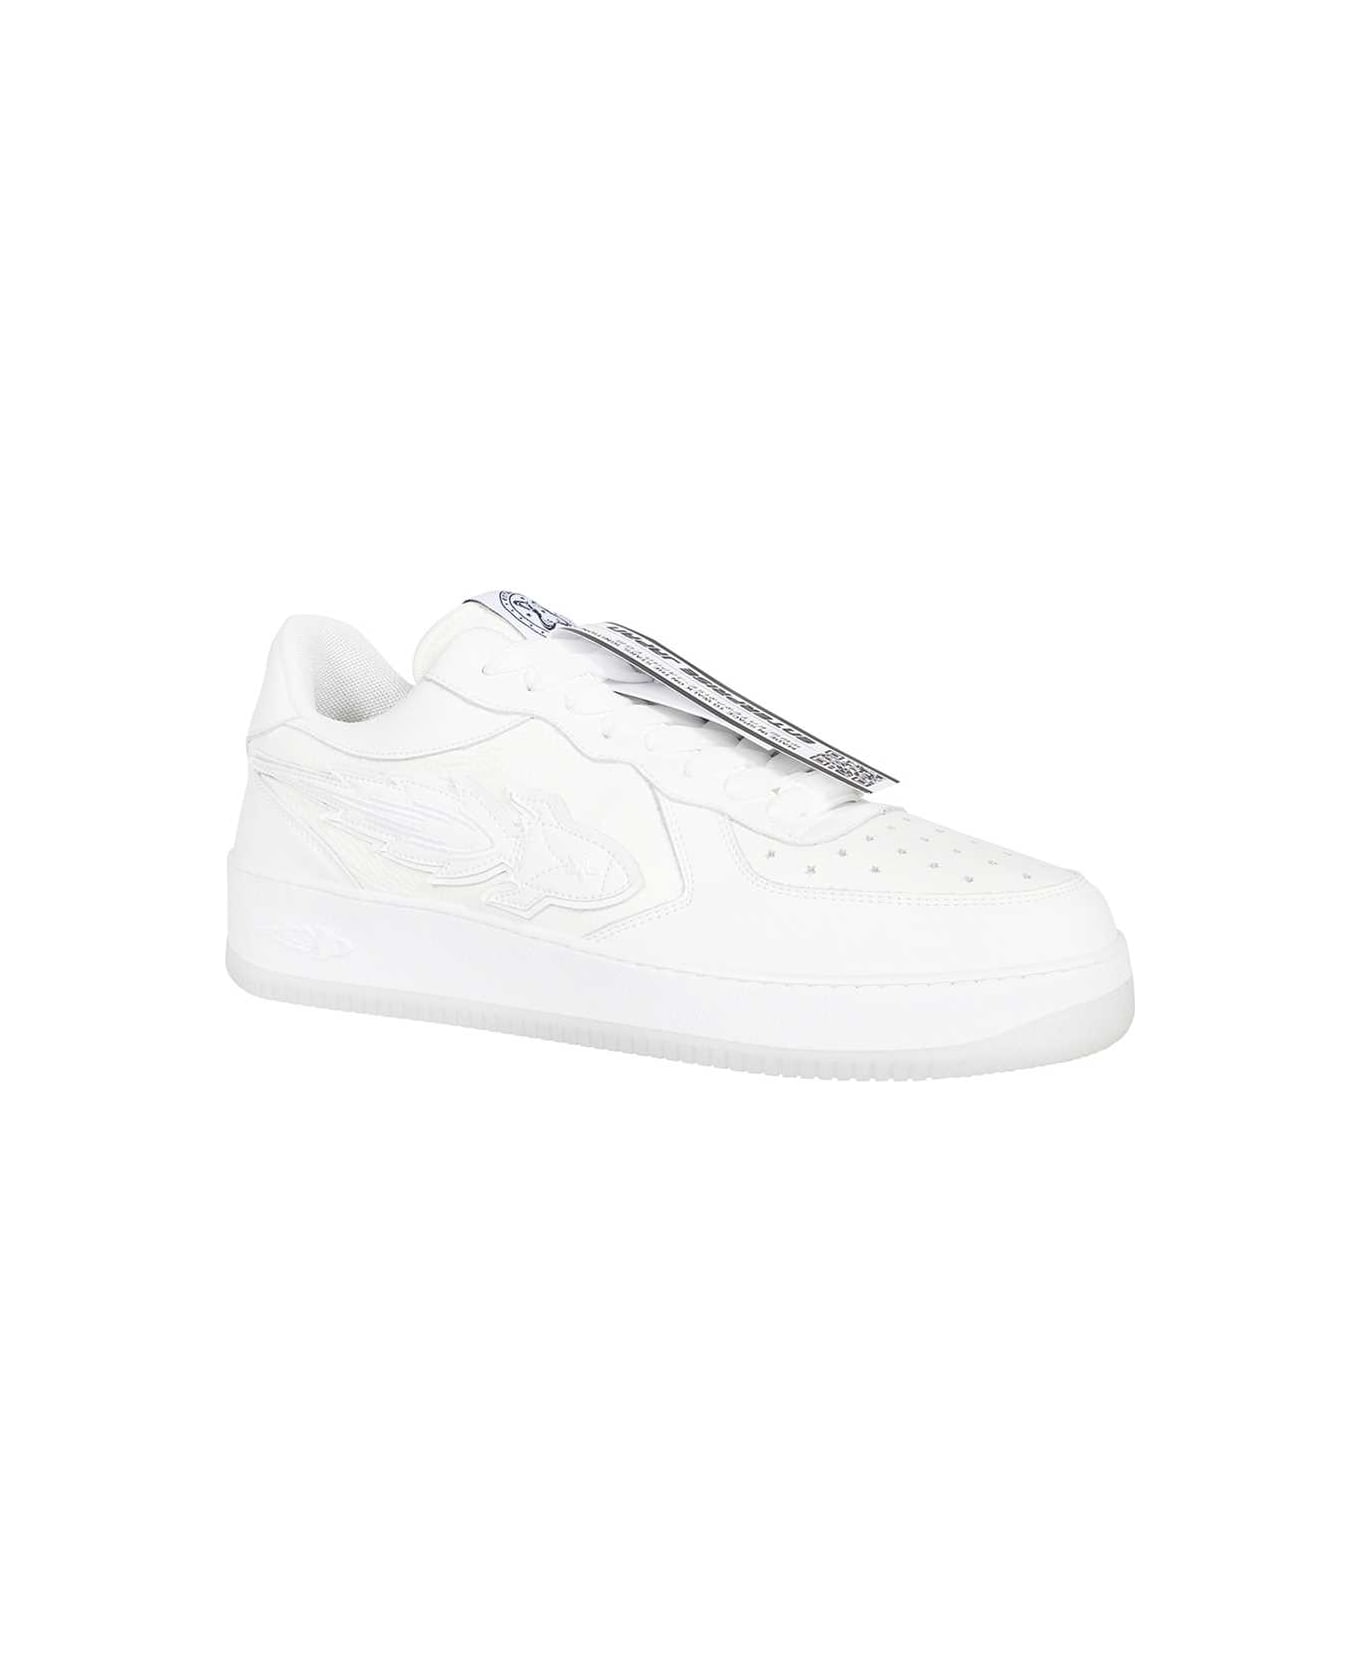 Enterprise Japan Low-top Sneakers - White